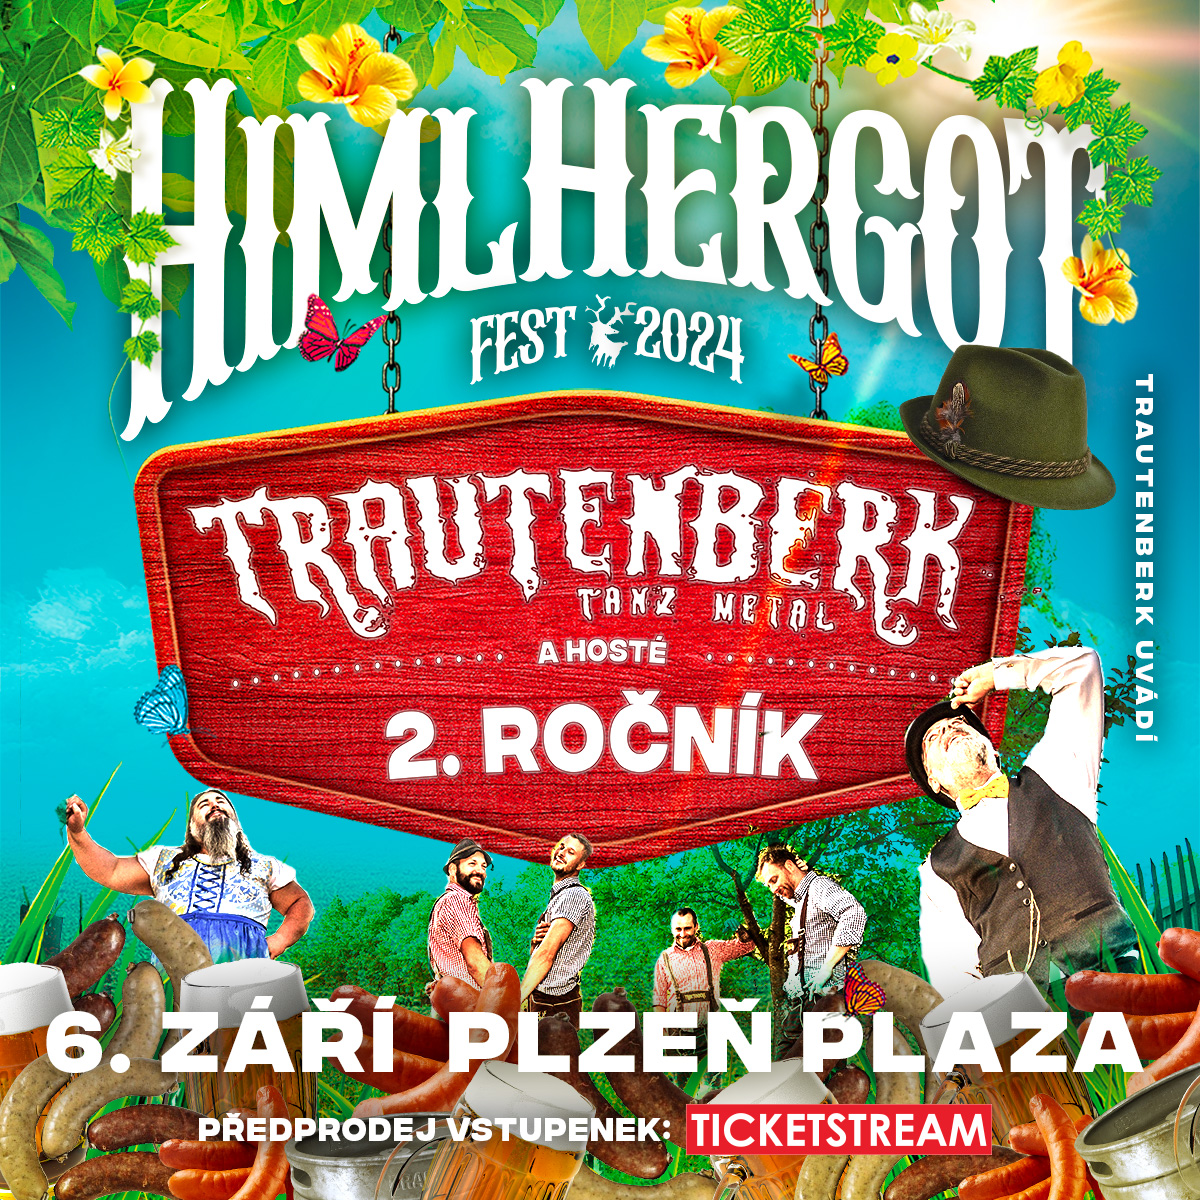 HIMLHERGOTFEST- festival v Plzni- TRAUTENBERK A HOSTÉ -Amfiteátr Plaza Plzeň